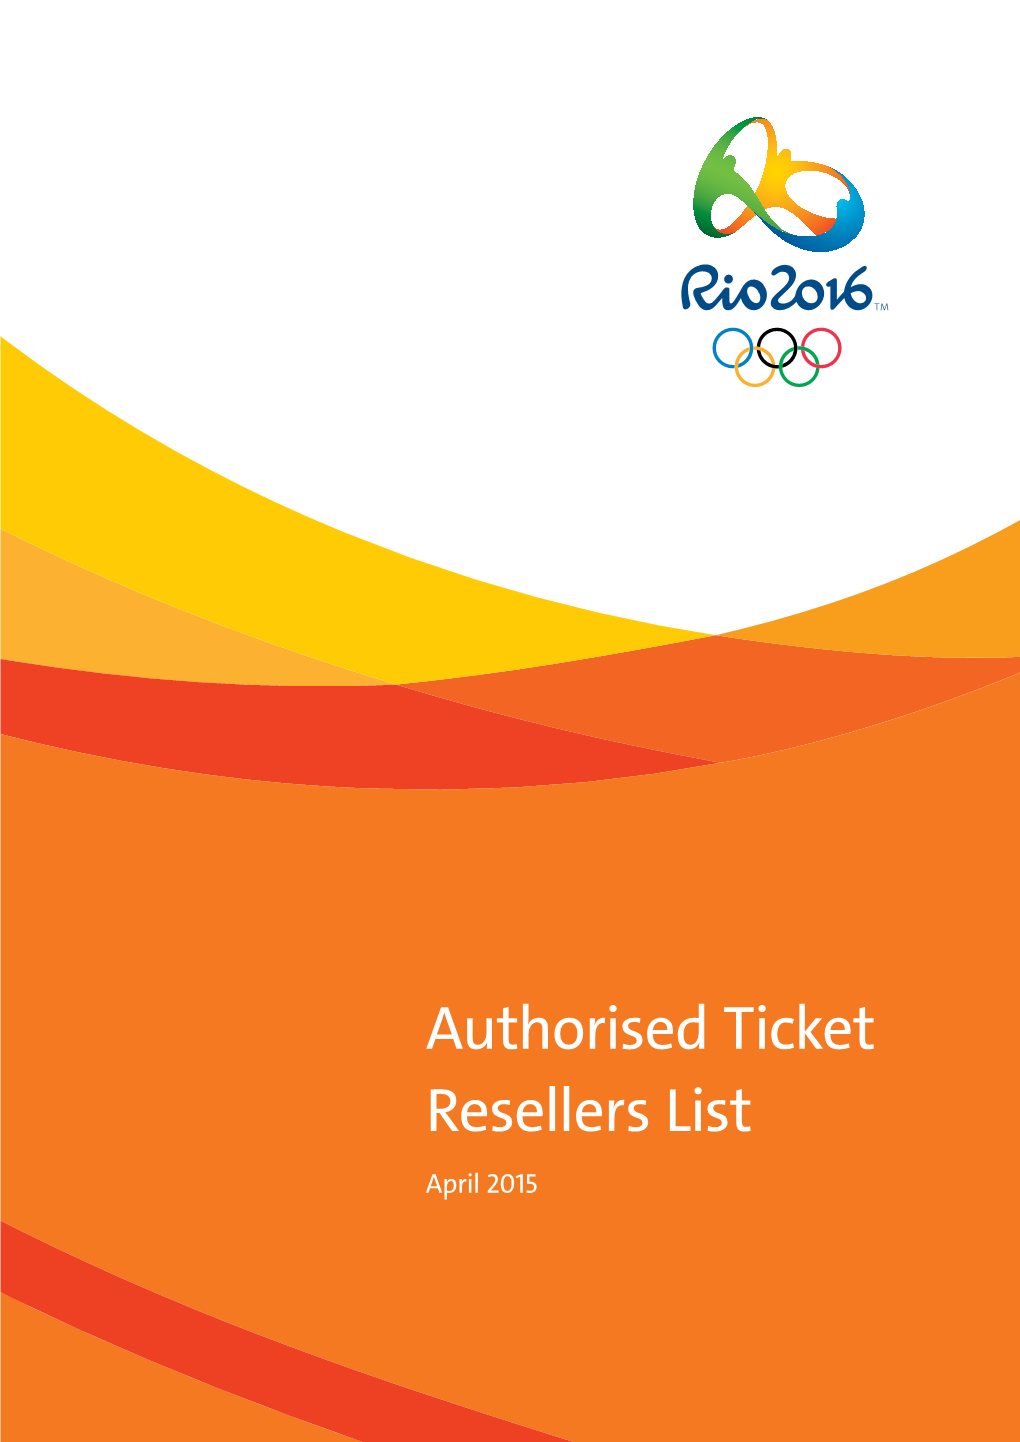 Authorised Ticket Resellers List April 2015 Authorised Ticket Resellers List